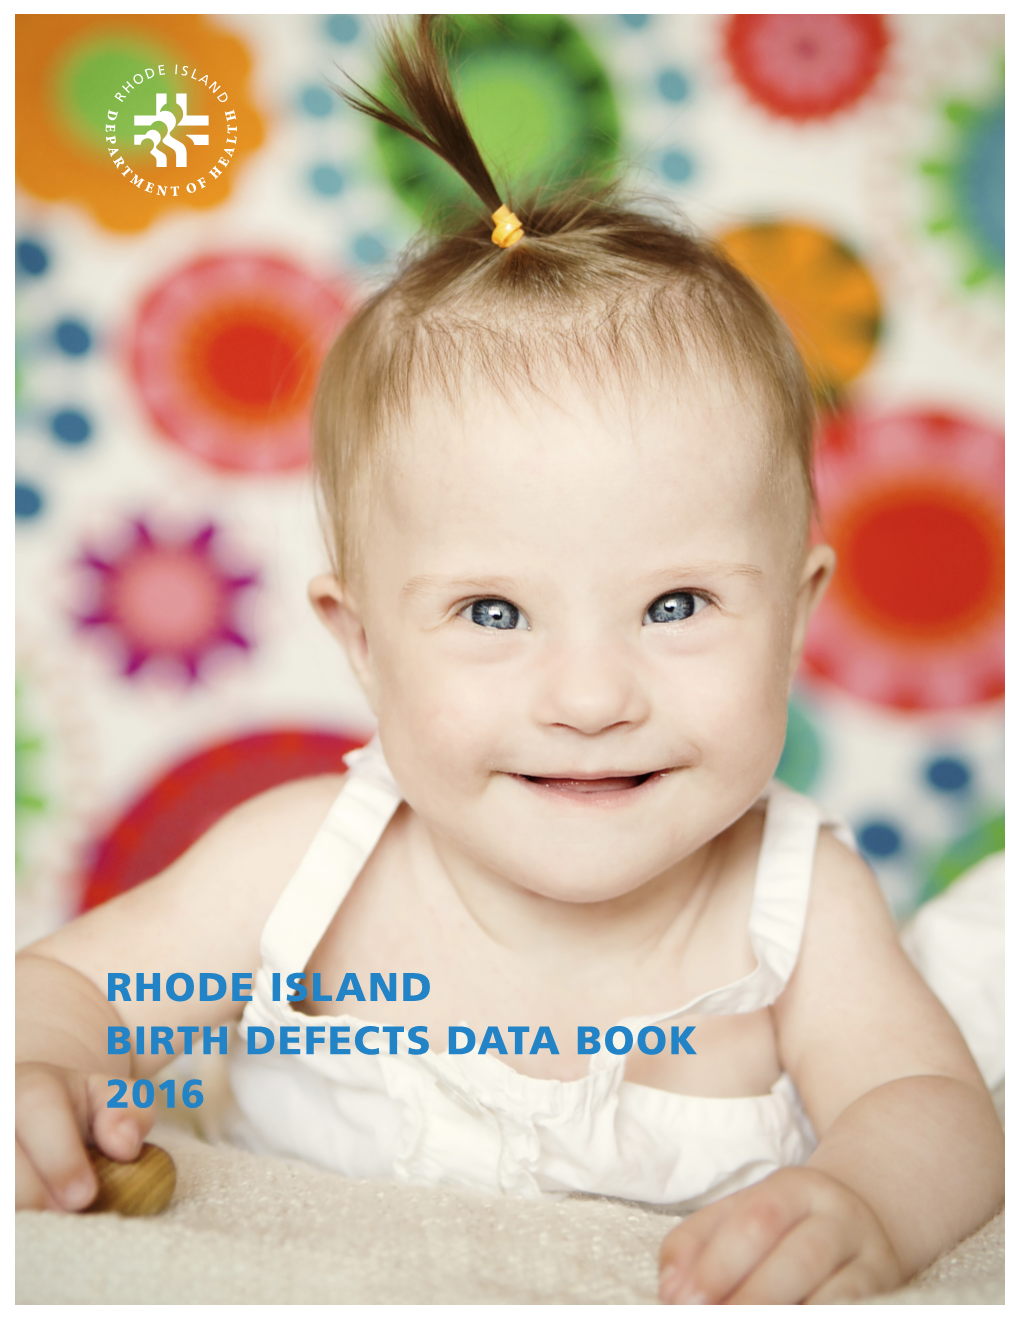 Rhode Island Birth Defects Data Book 2016 Introduction